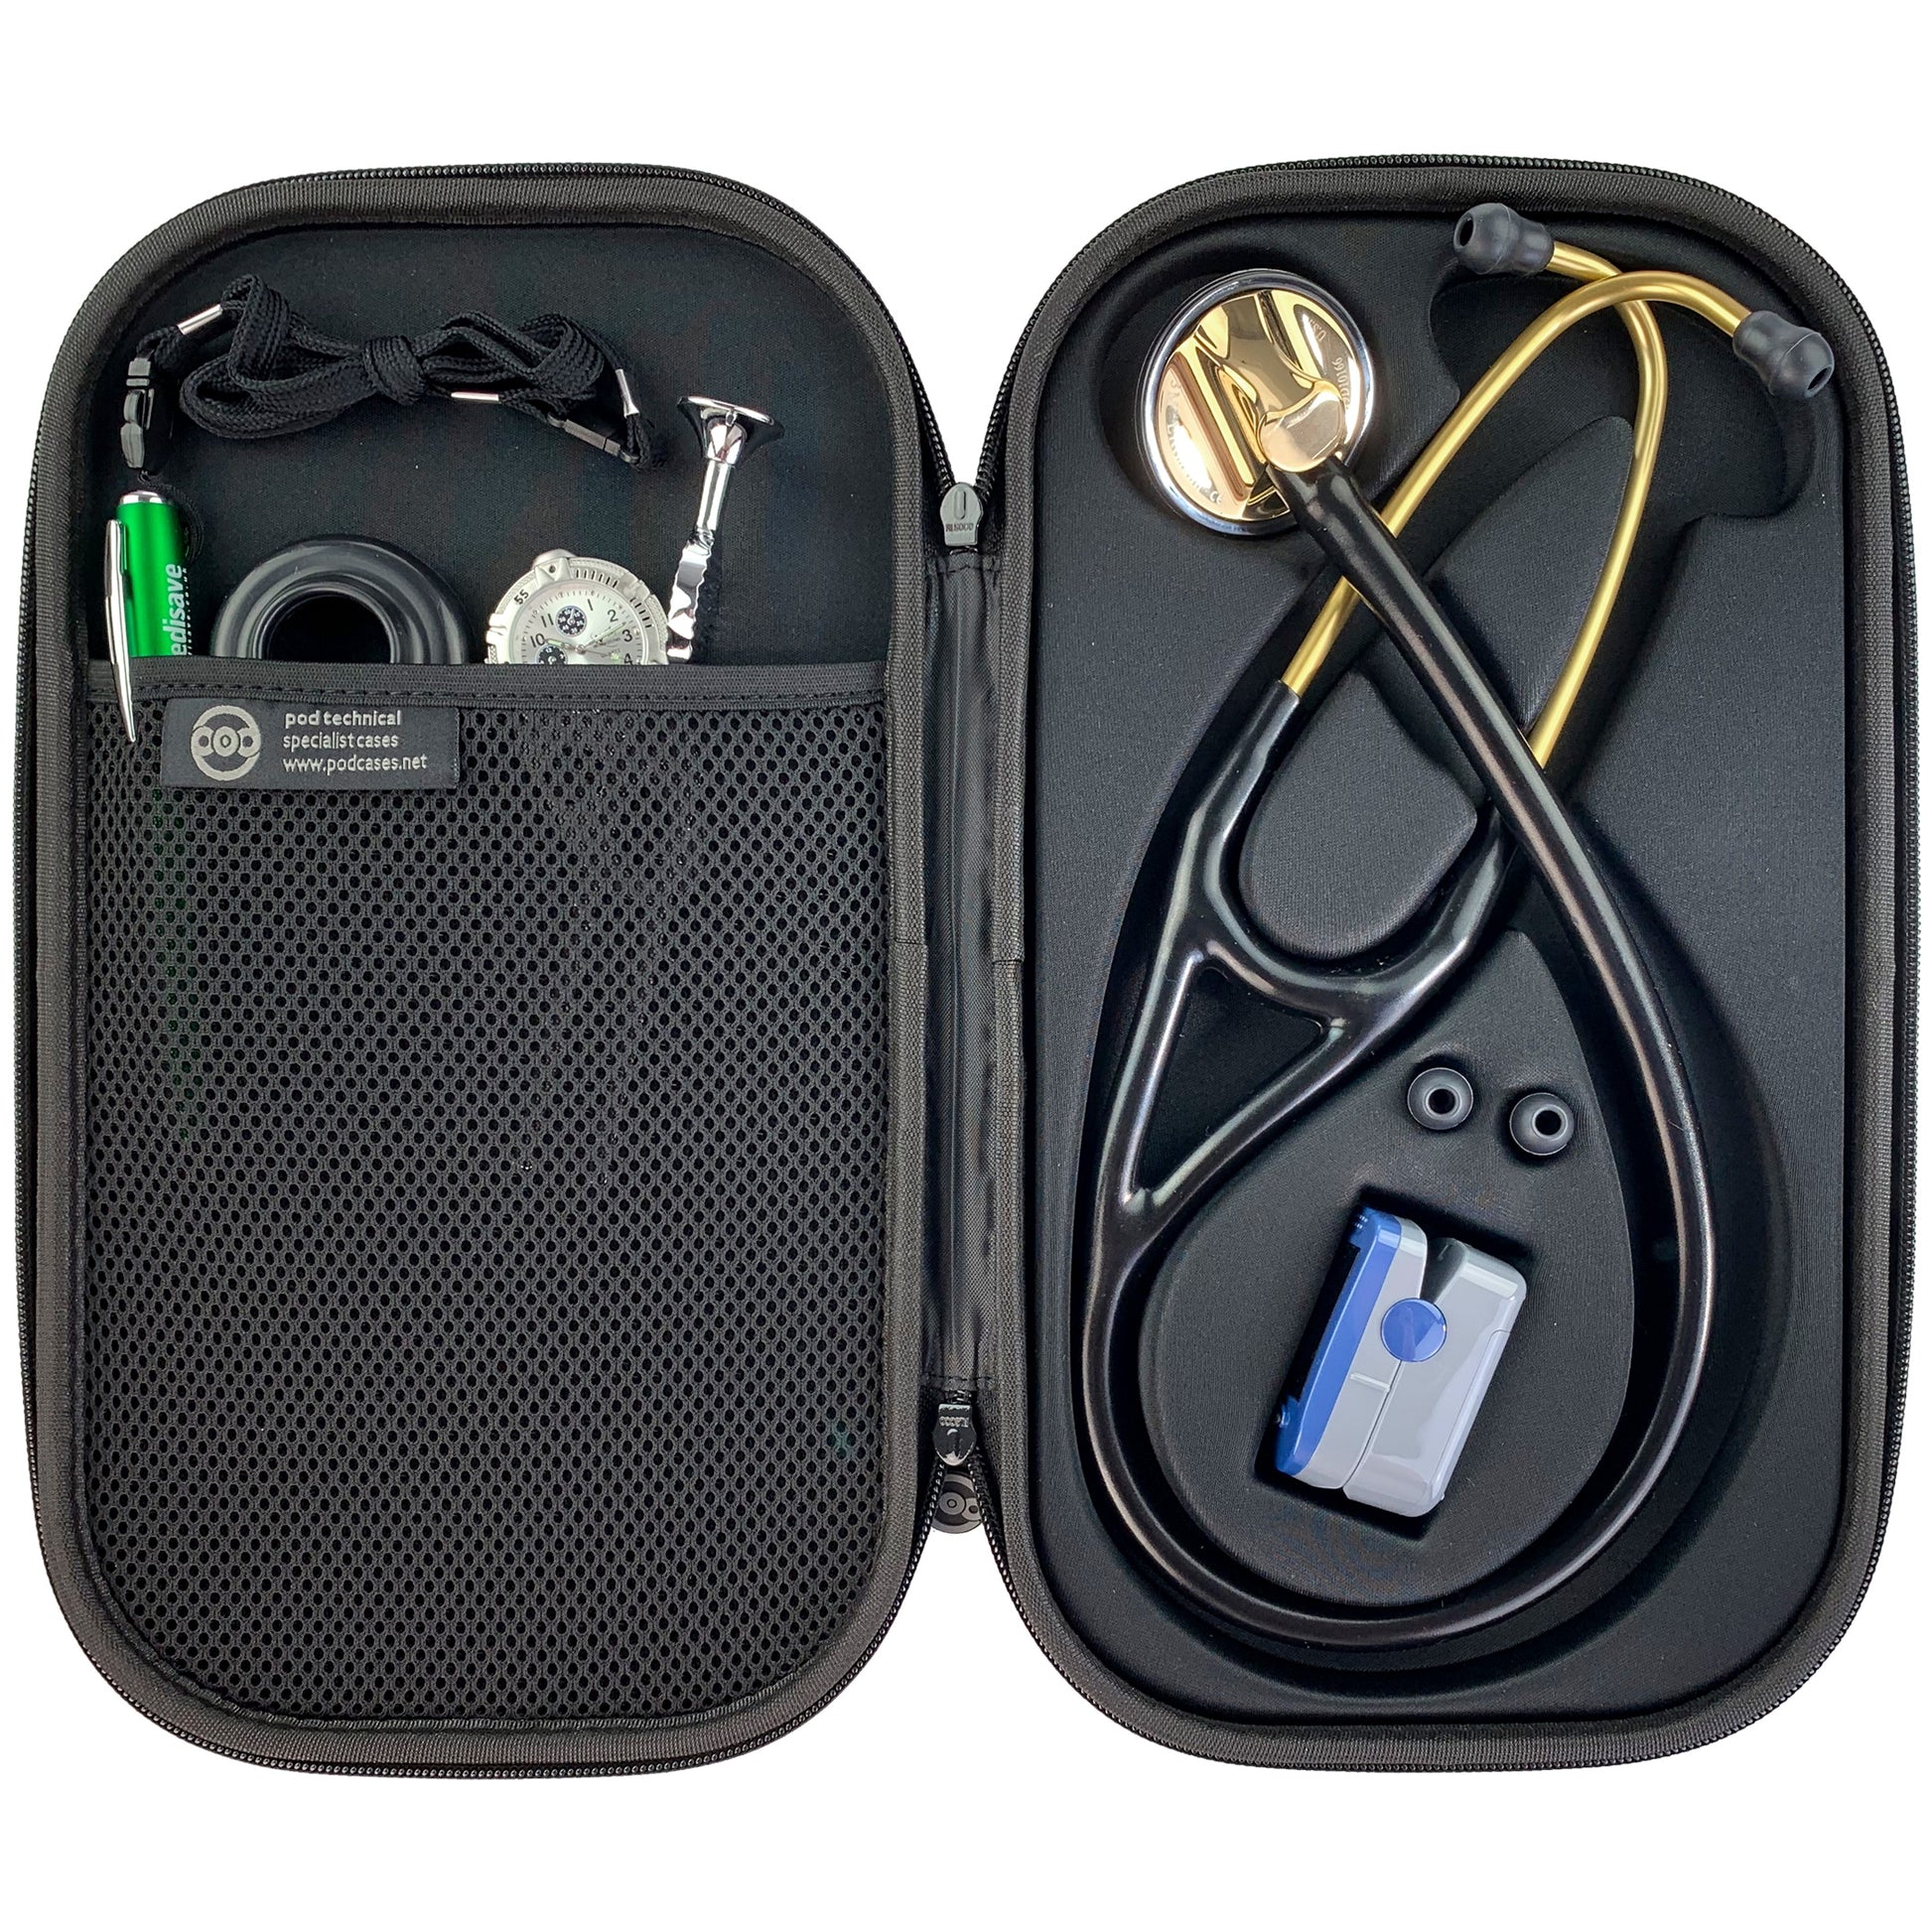 Pod Technical Cardiopod II Stethoscope Case for all Littmann Stethoscopes - Purple  Pod Technical Specialist Cases   